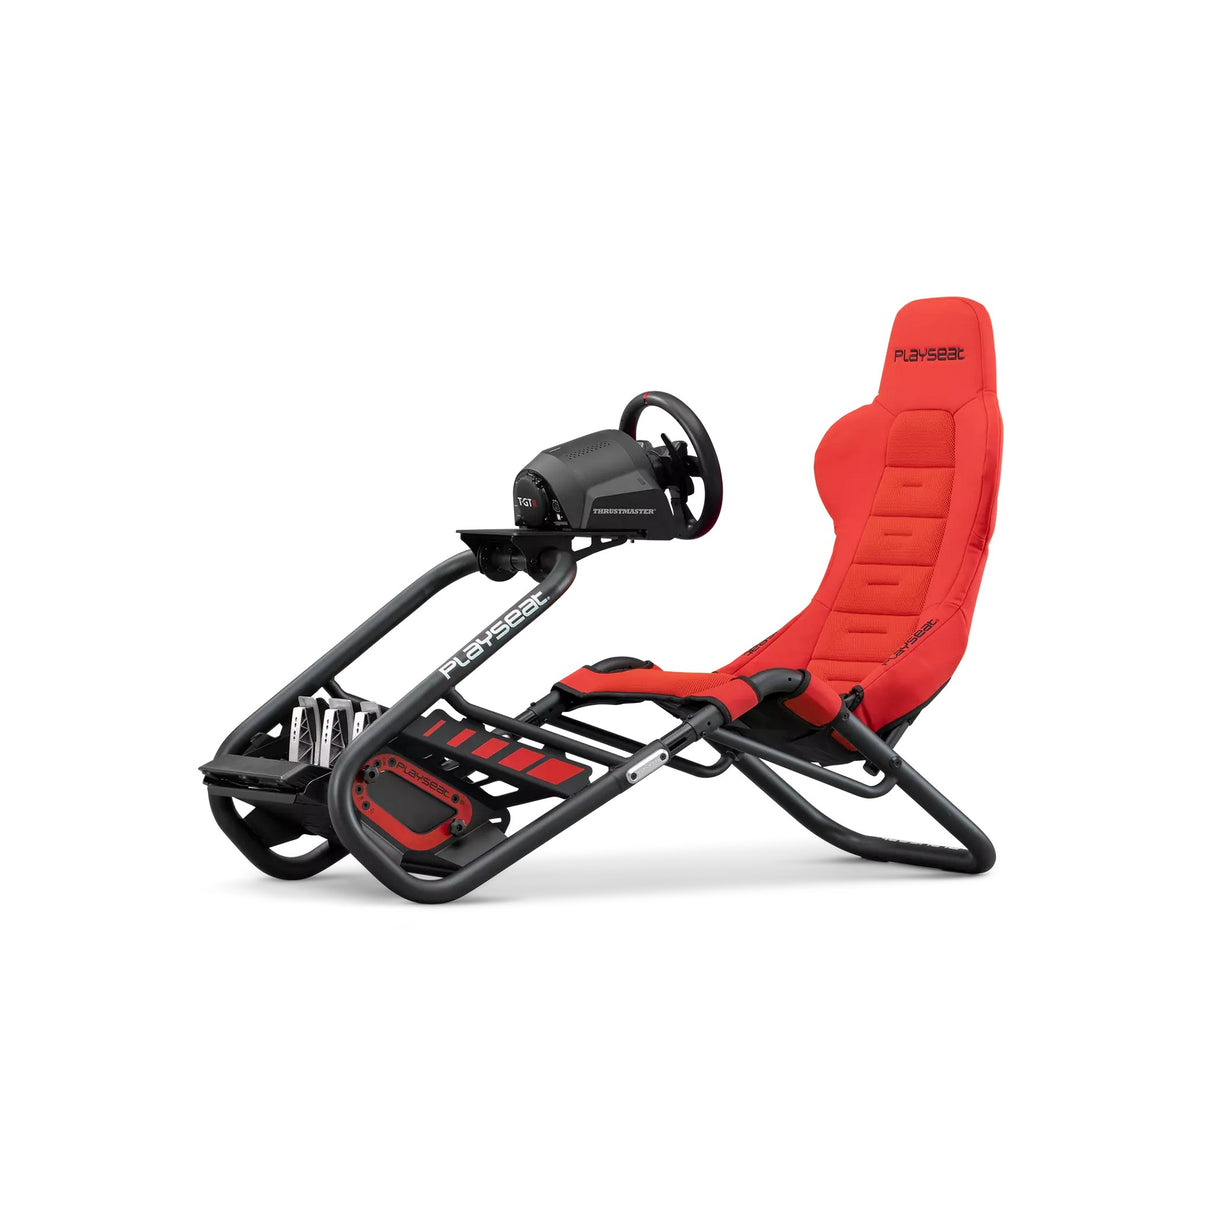 Playseat Trophy Gaming Racing Seat, Red